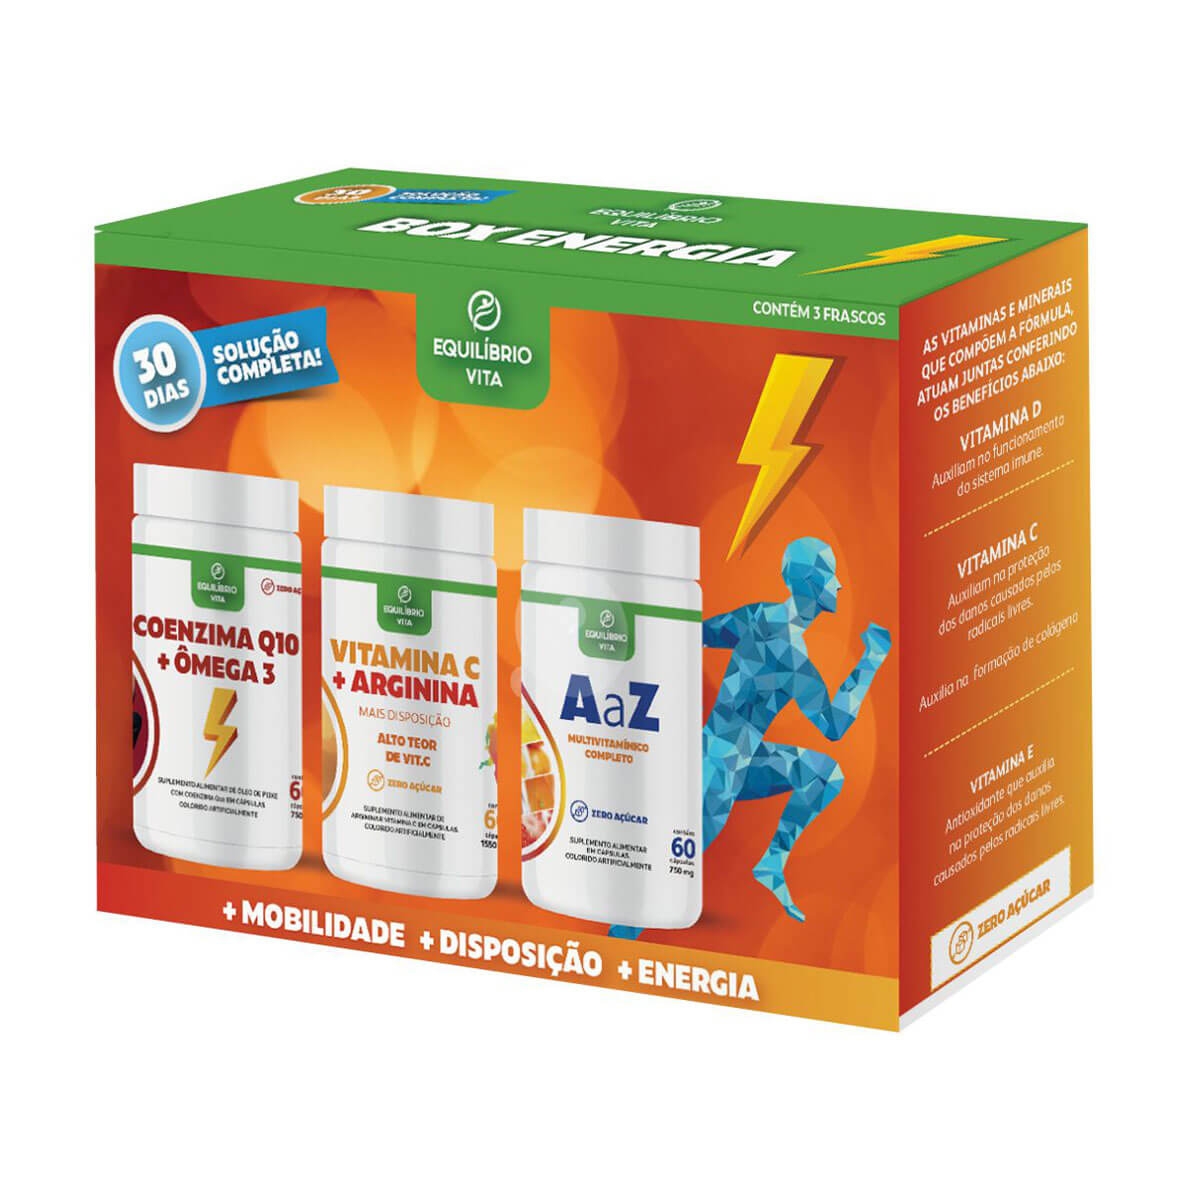 Box Energia Equilíbrio Vita Kit com Coenzima Q10 + Vitamina C + Multivitamínico com 60 cápsulas cada